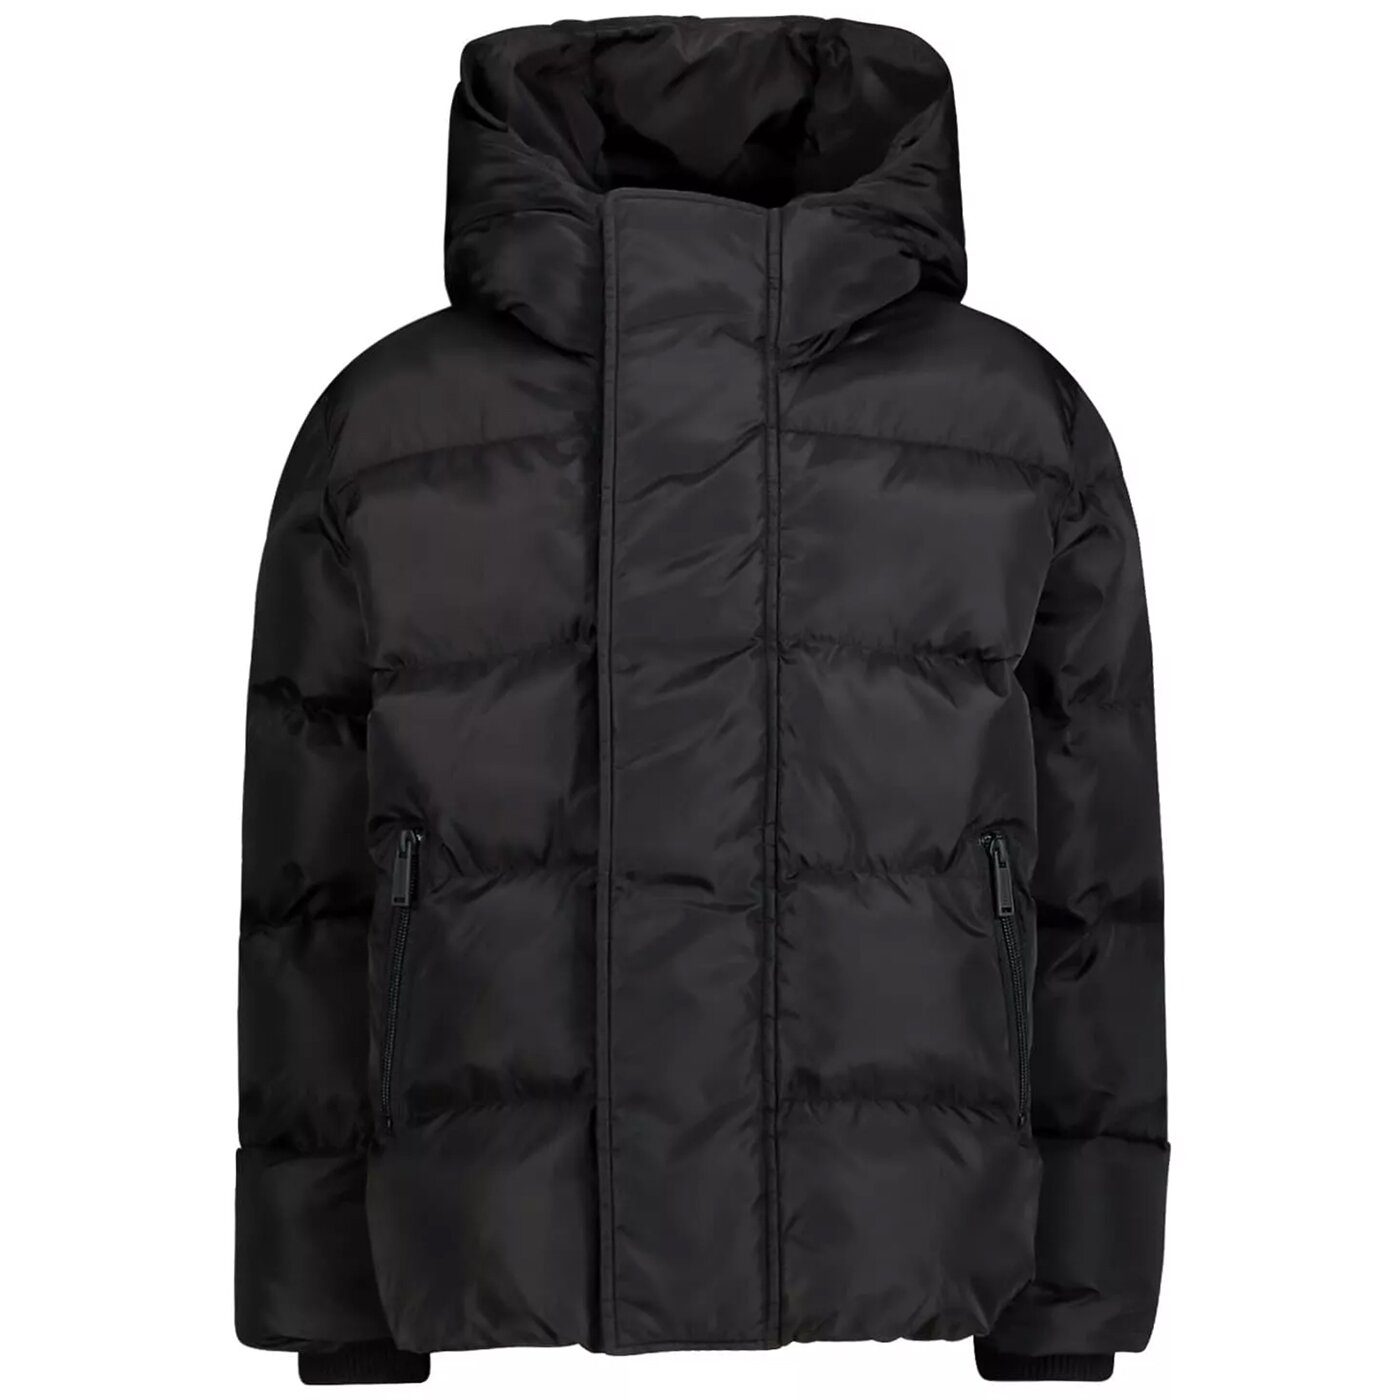 Zeep pit Voorspellen dsquared-jacket-dq1090-d00bn-d2j360u-DQ900 - Fashion for Kids & Teens